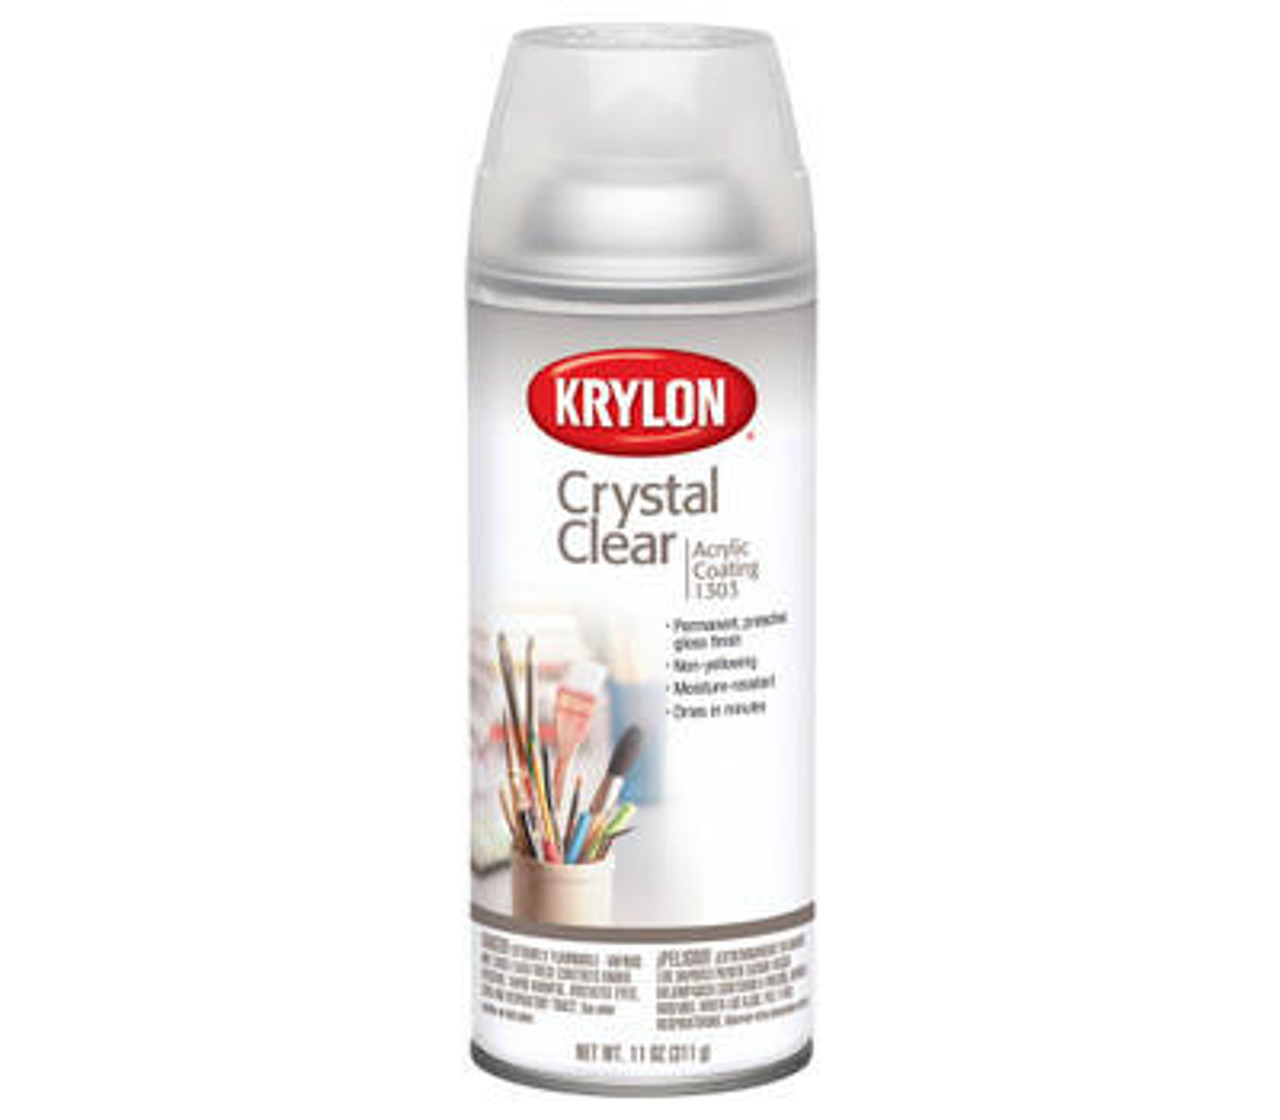 Krylon Triple Thick Crystal Clear Spray Glaze - 12 oz